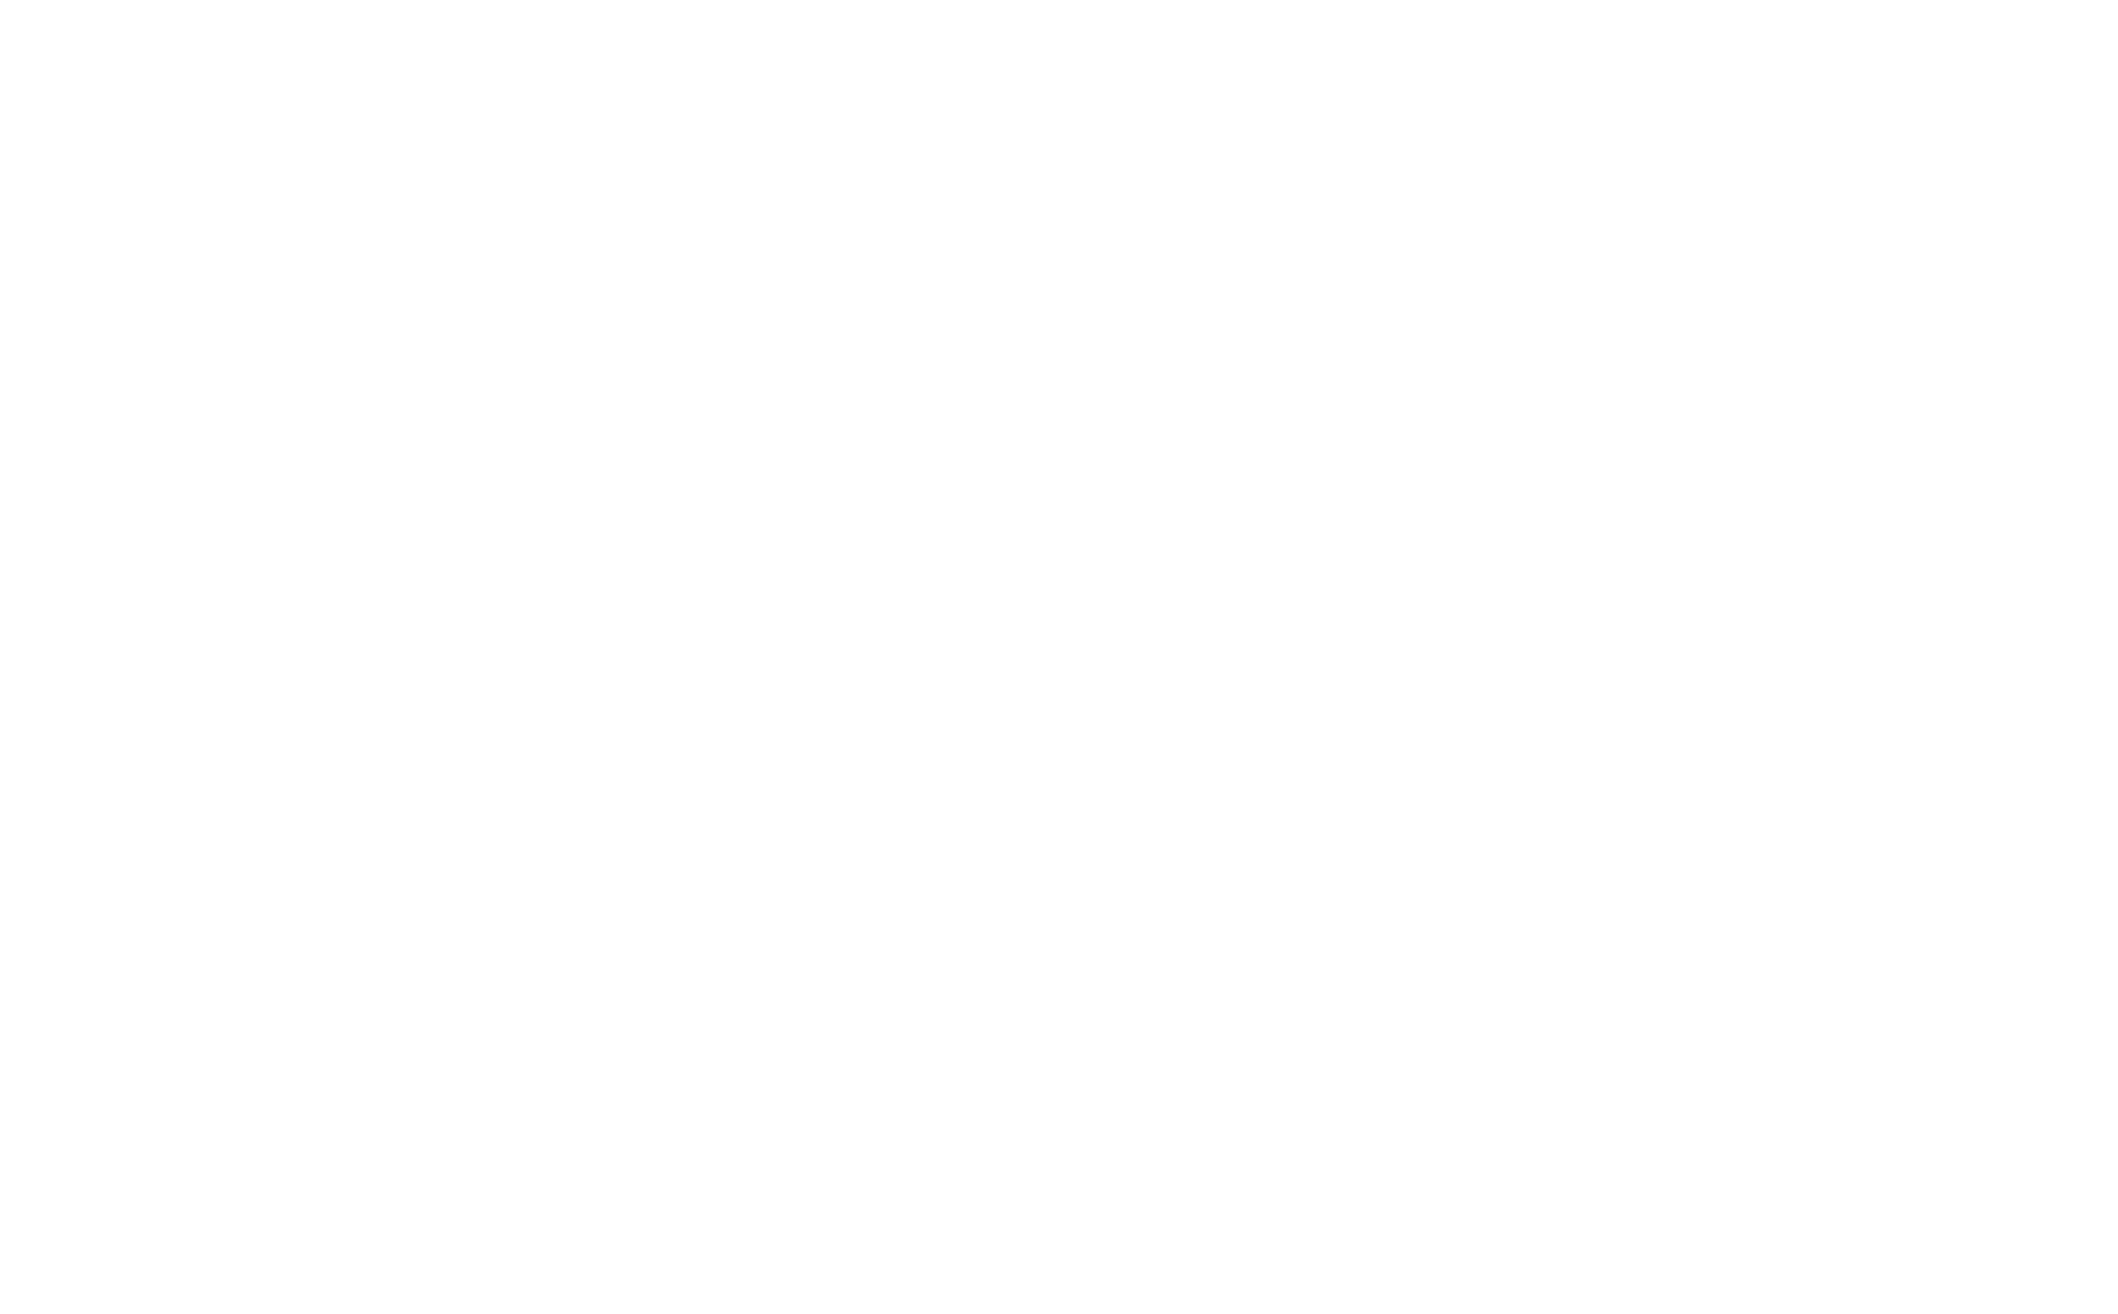 Highlight Studio